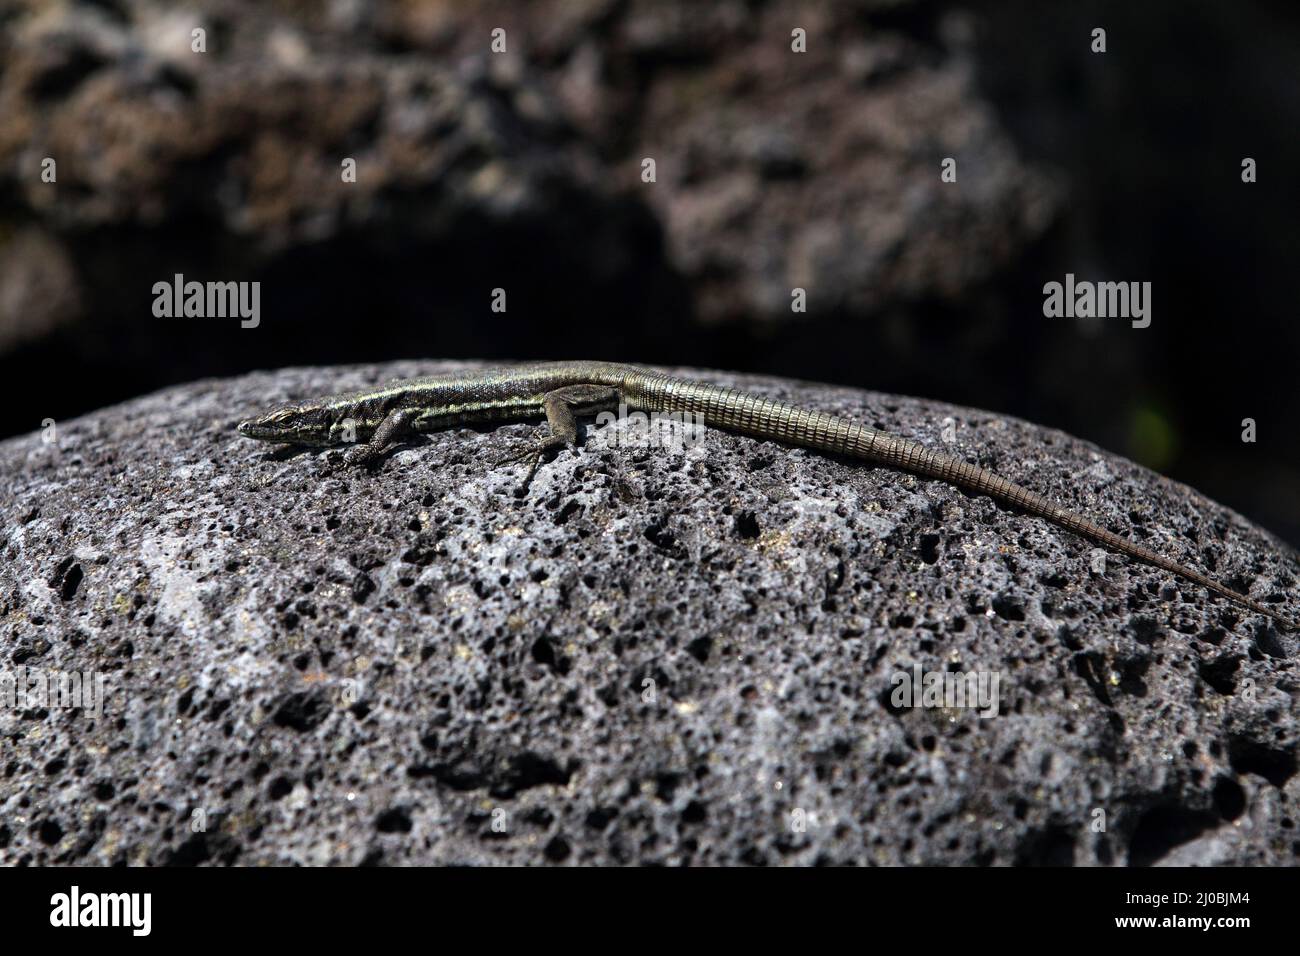 Teira dugesii, Lacerta dugesii, Madeira wall lizard Stock Photo